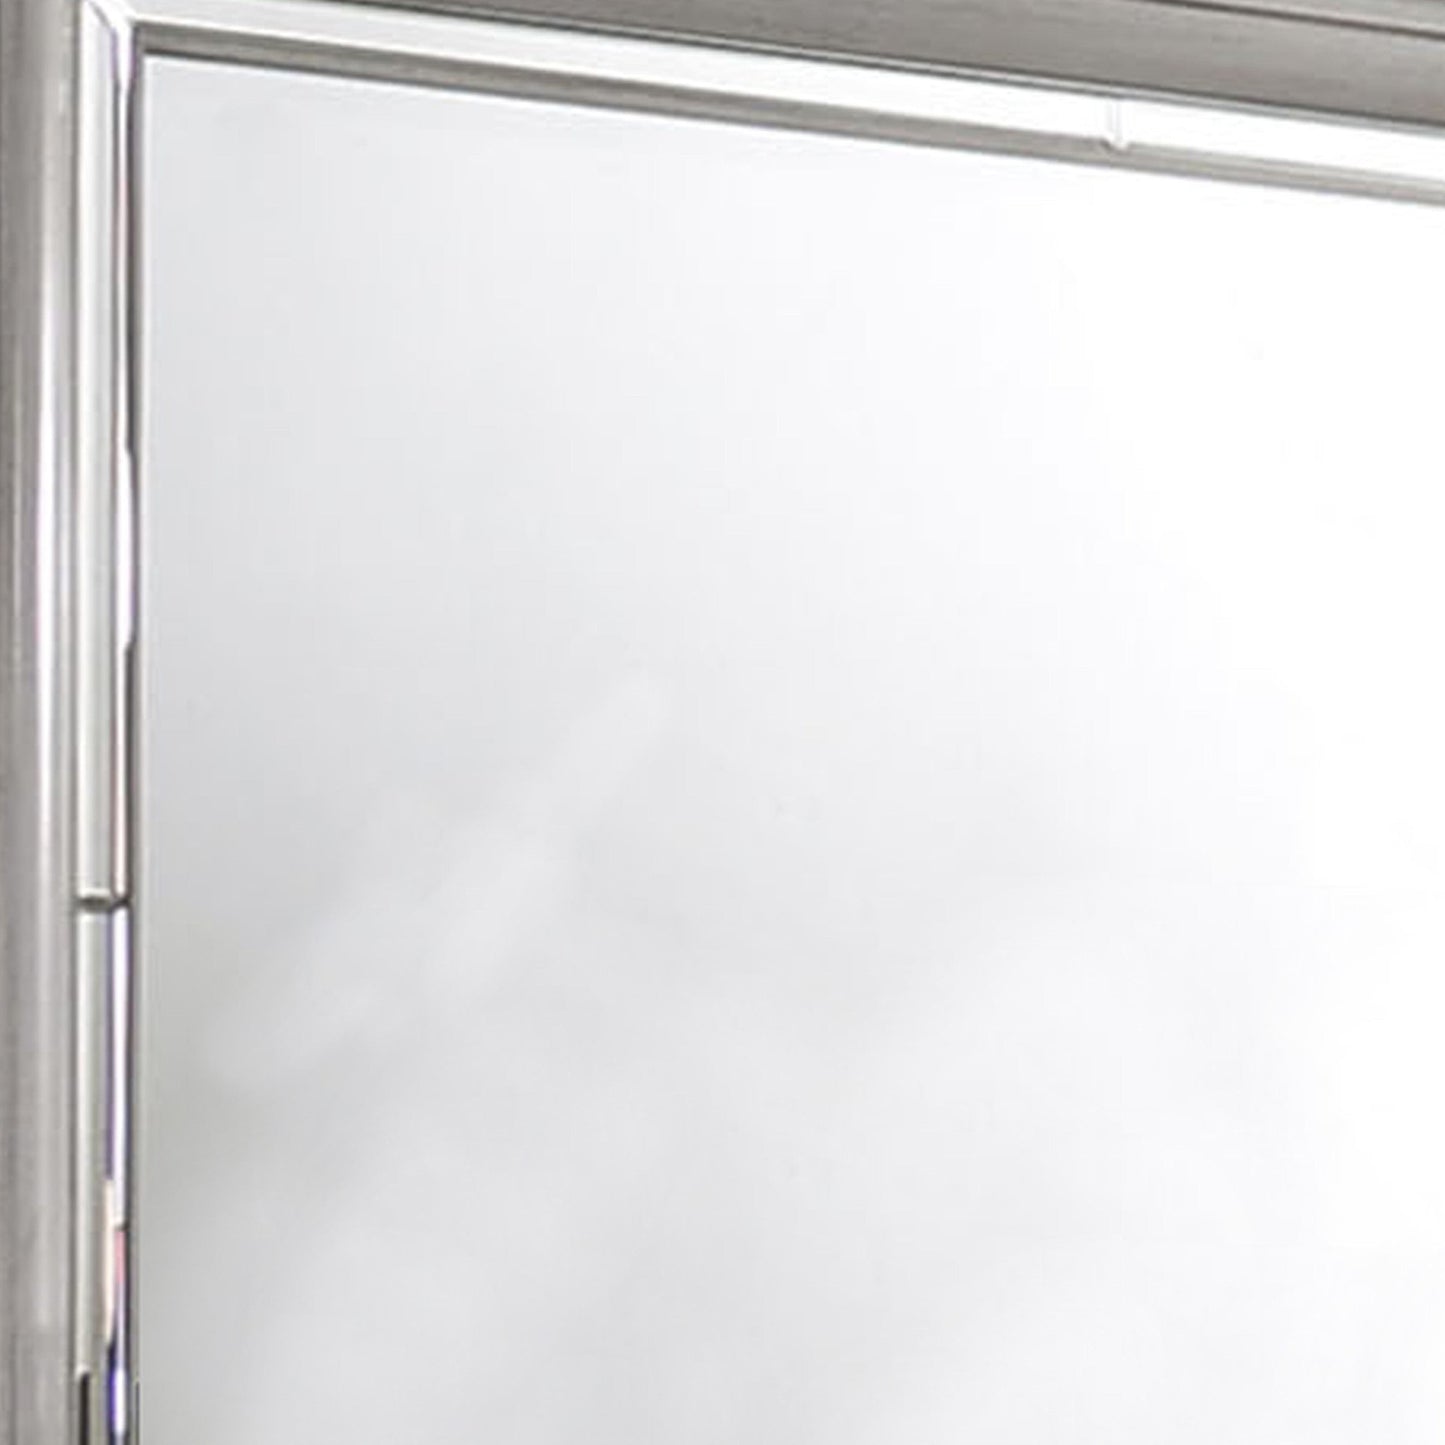 Benzara Gray Rectangular Contemporary Style Wooden Framed Mirror With Beveled Edge